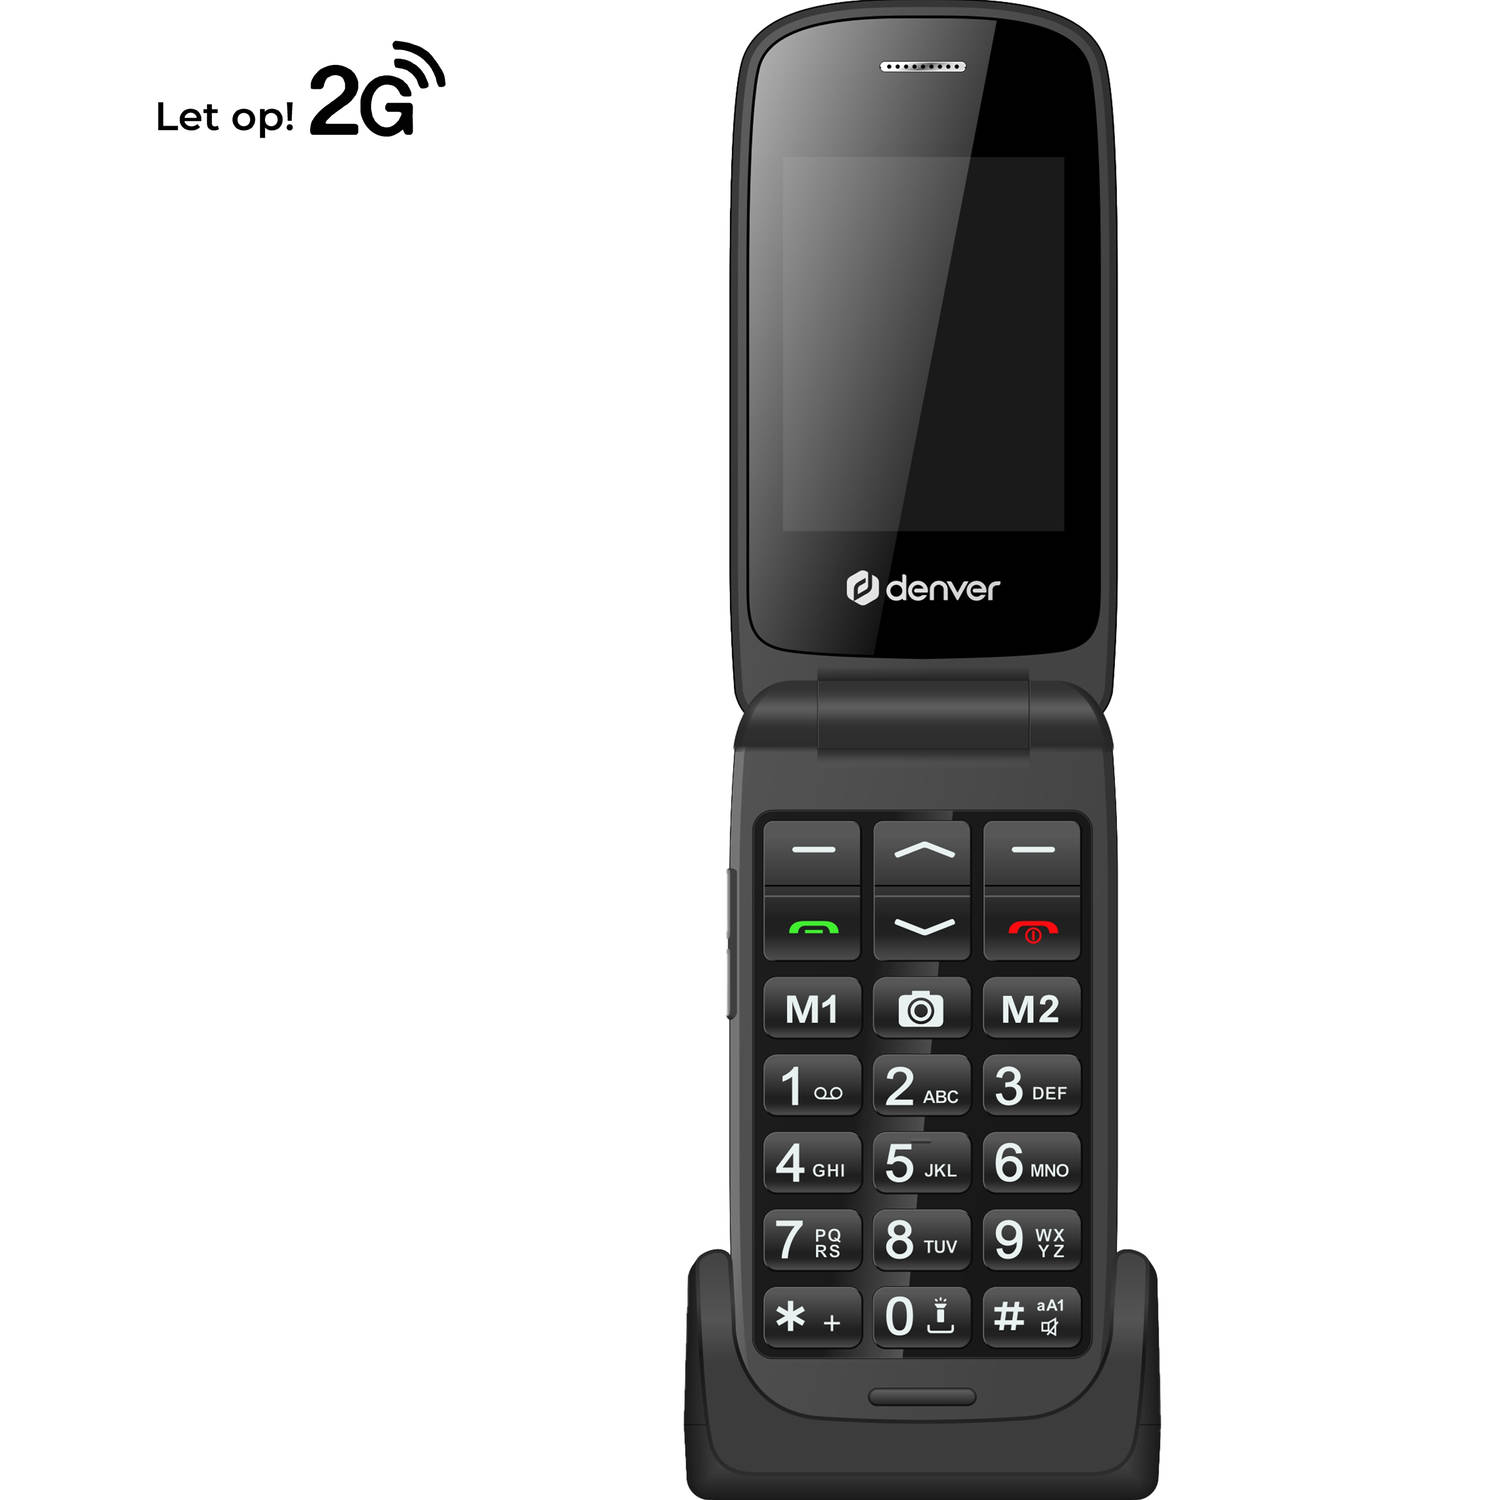 Denver Senioren Mobiele Telefoon - INCL. PREPAID SIMKAART - Grote Toetsen - Oplaadstation - Dual SIM - GSM - 2G - Simlockvrij - SOS knop - BAS24400EB - Zwart